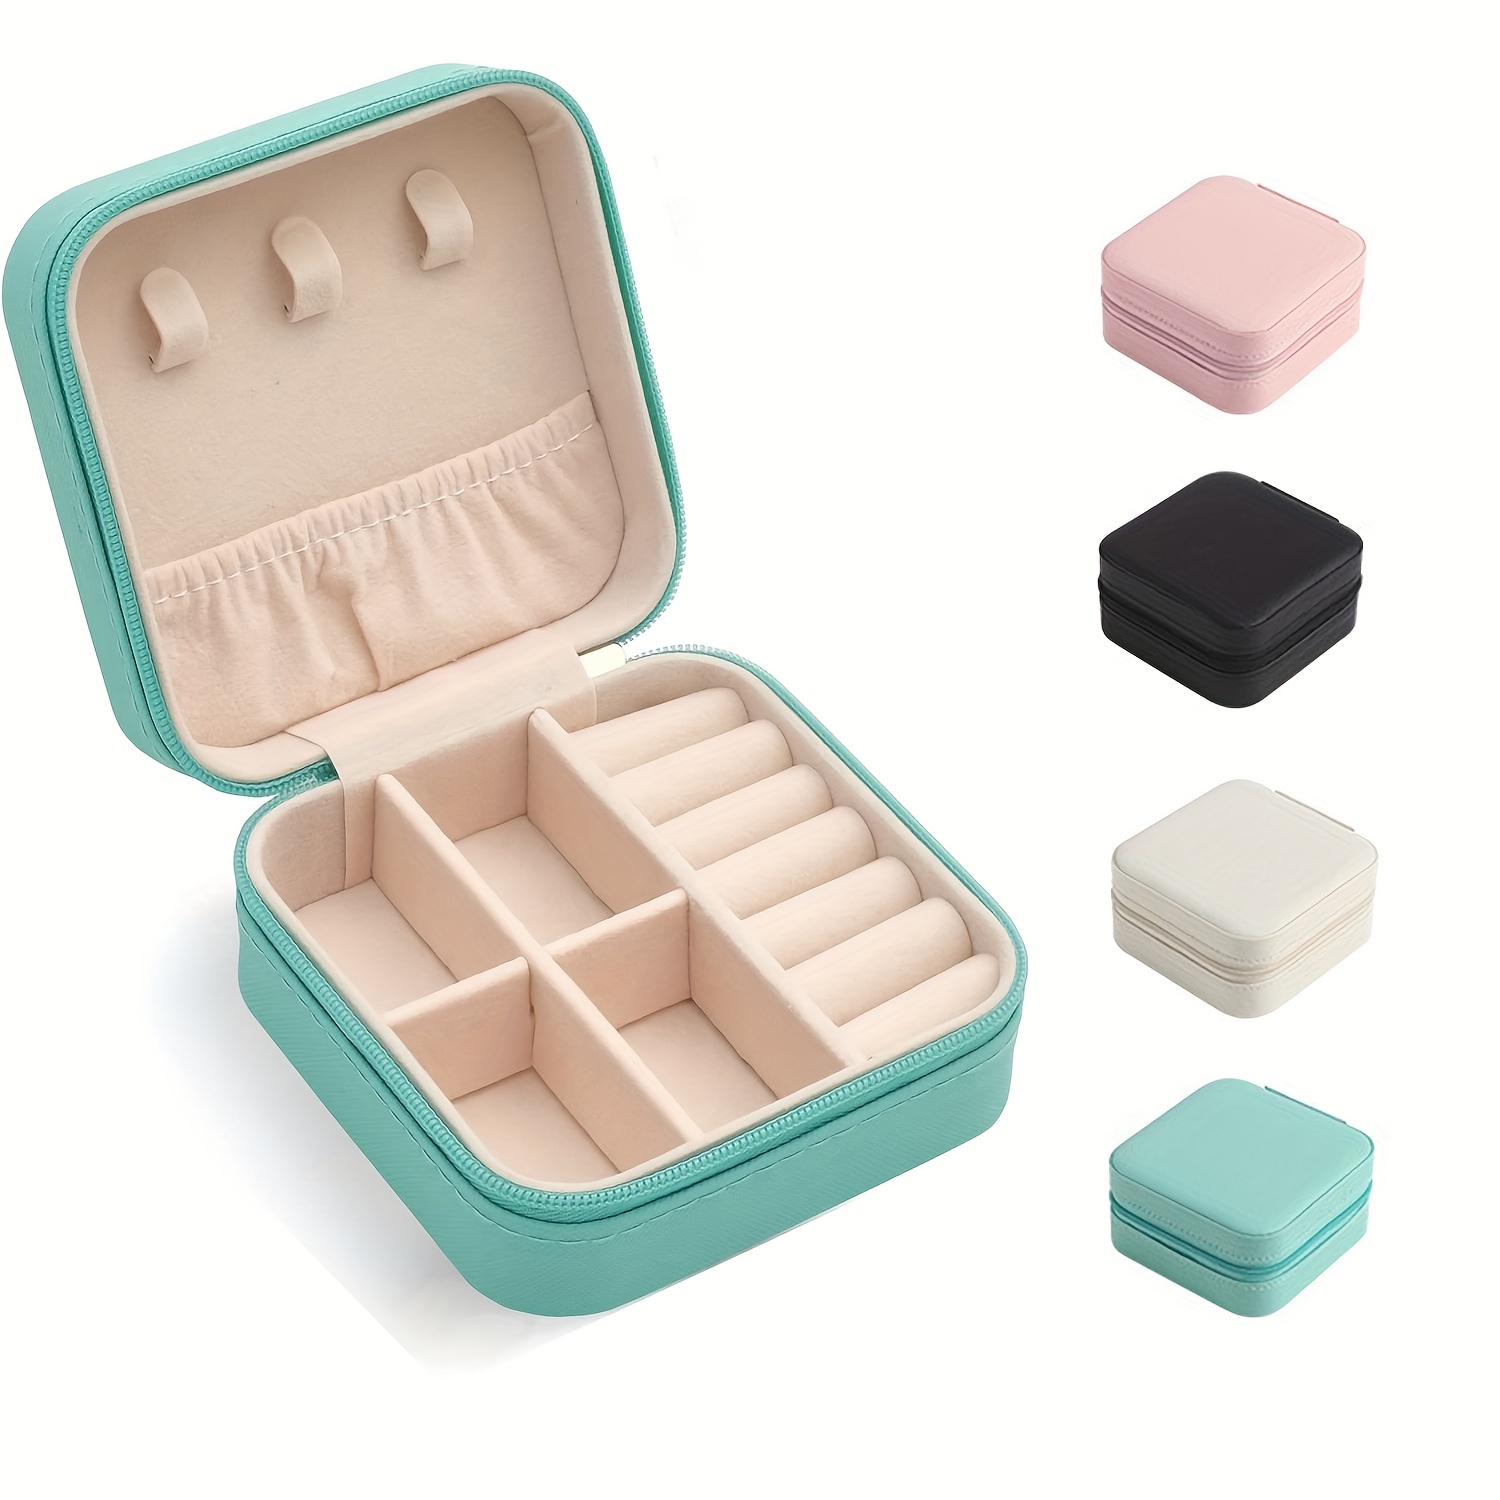 Mini Jewelry Box Travel Display Case Portable Storage Organizer